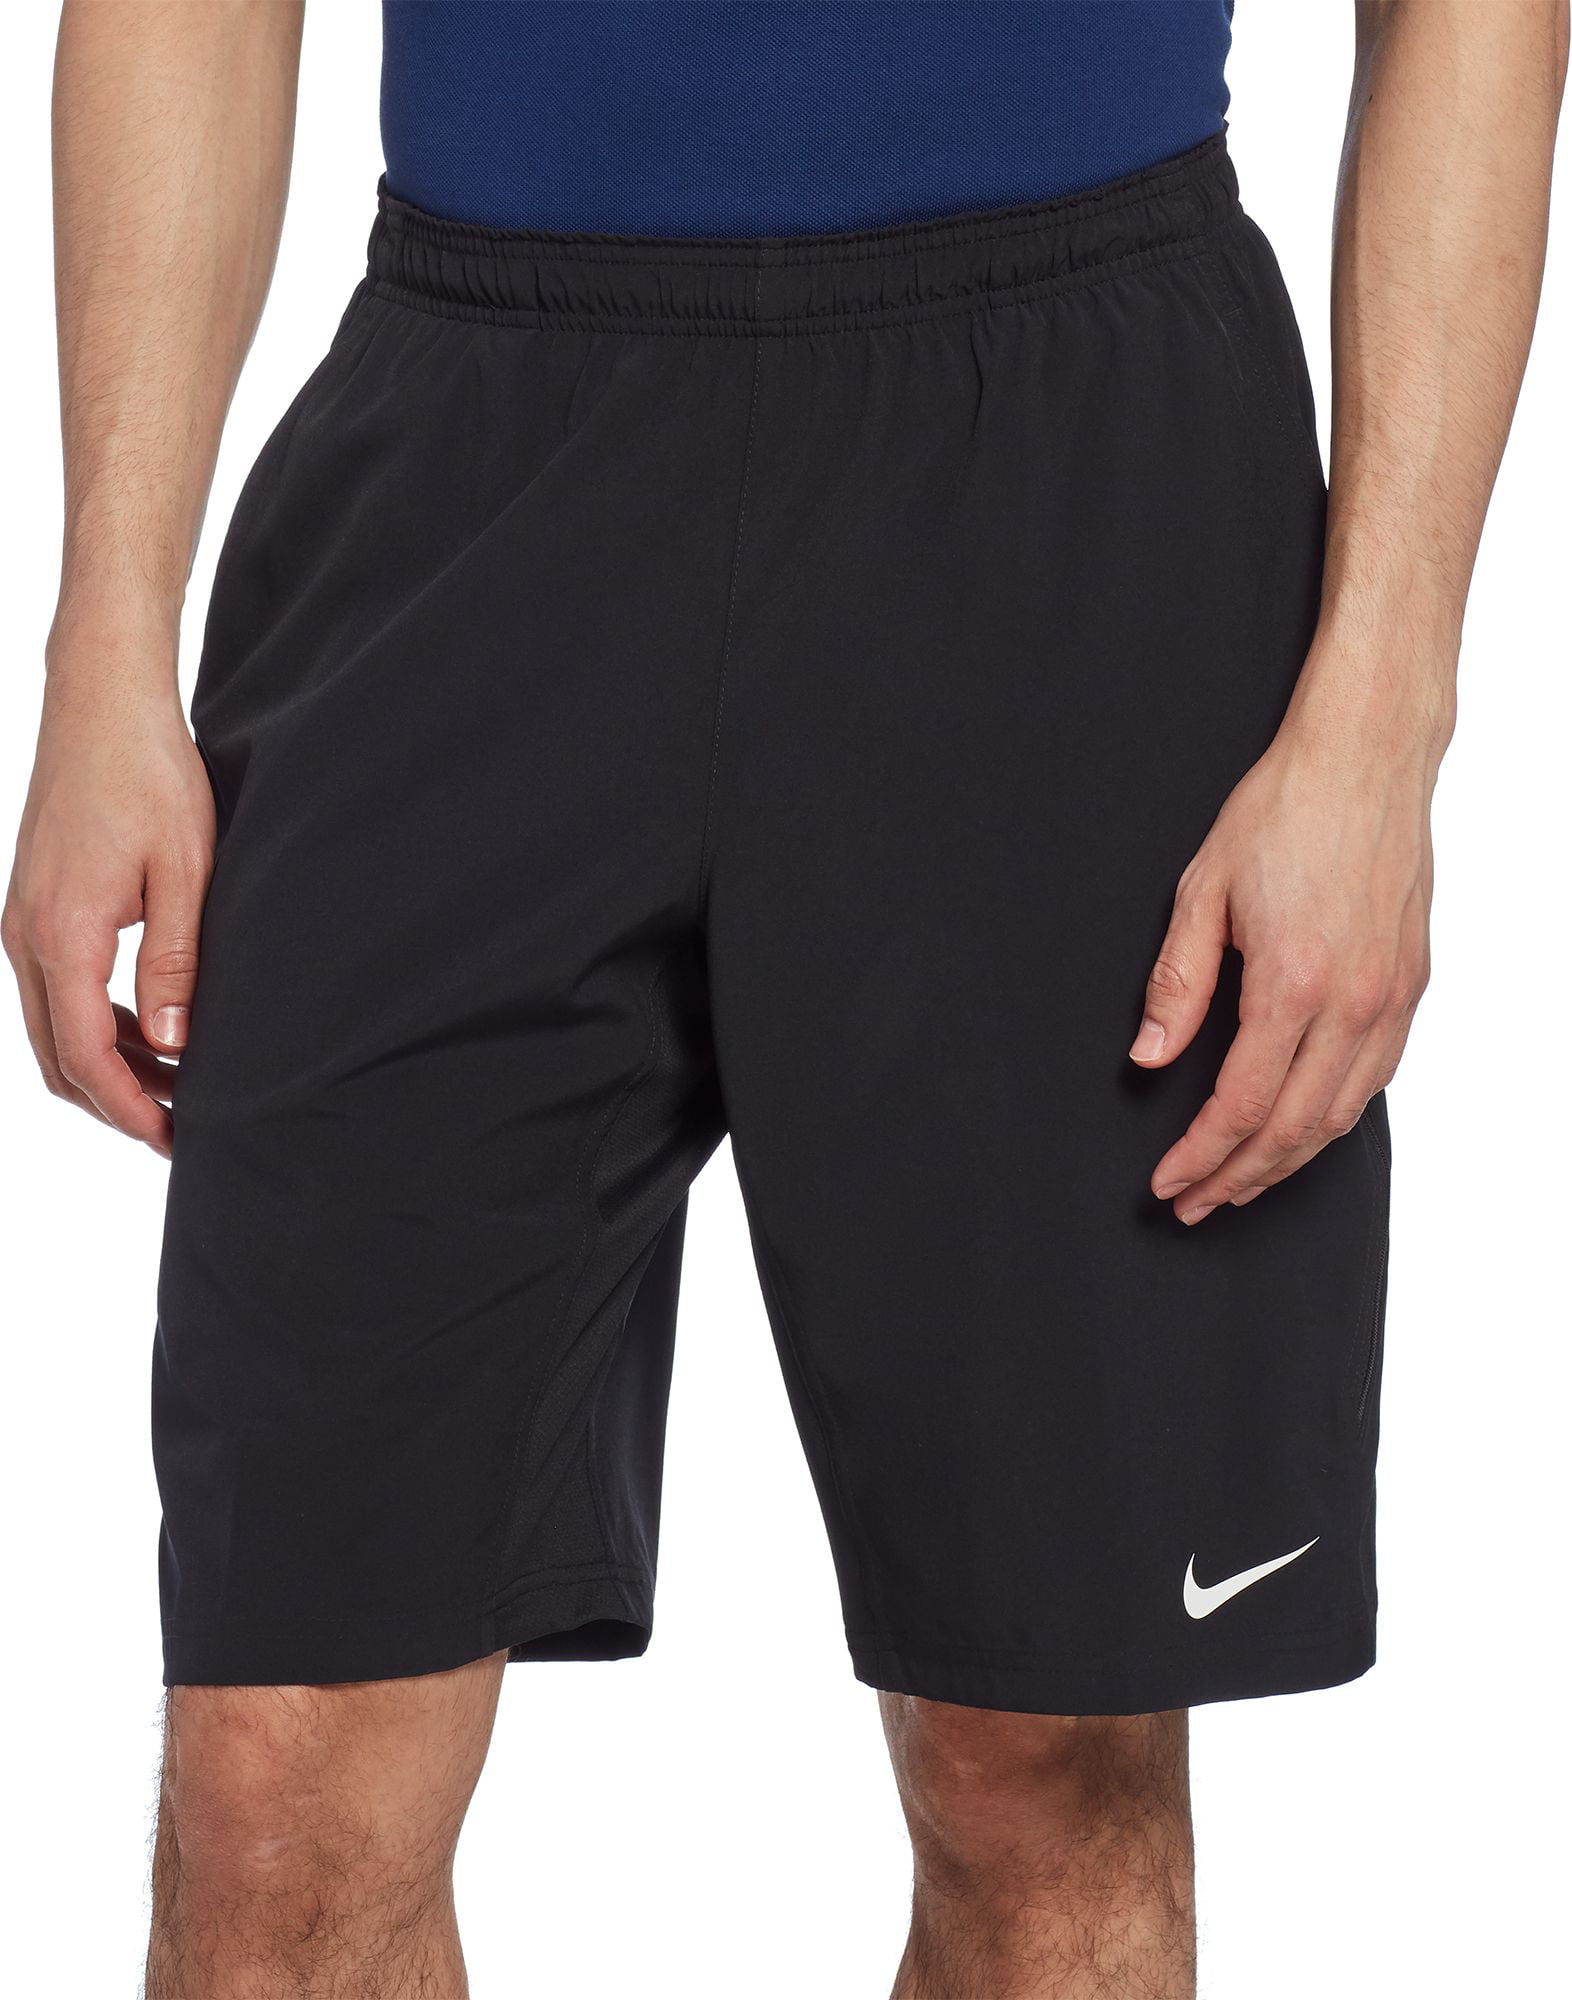 BOAST Men's Navy 7" Blank Club Tennis Shorts $60 NEW